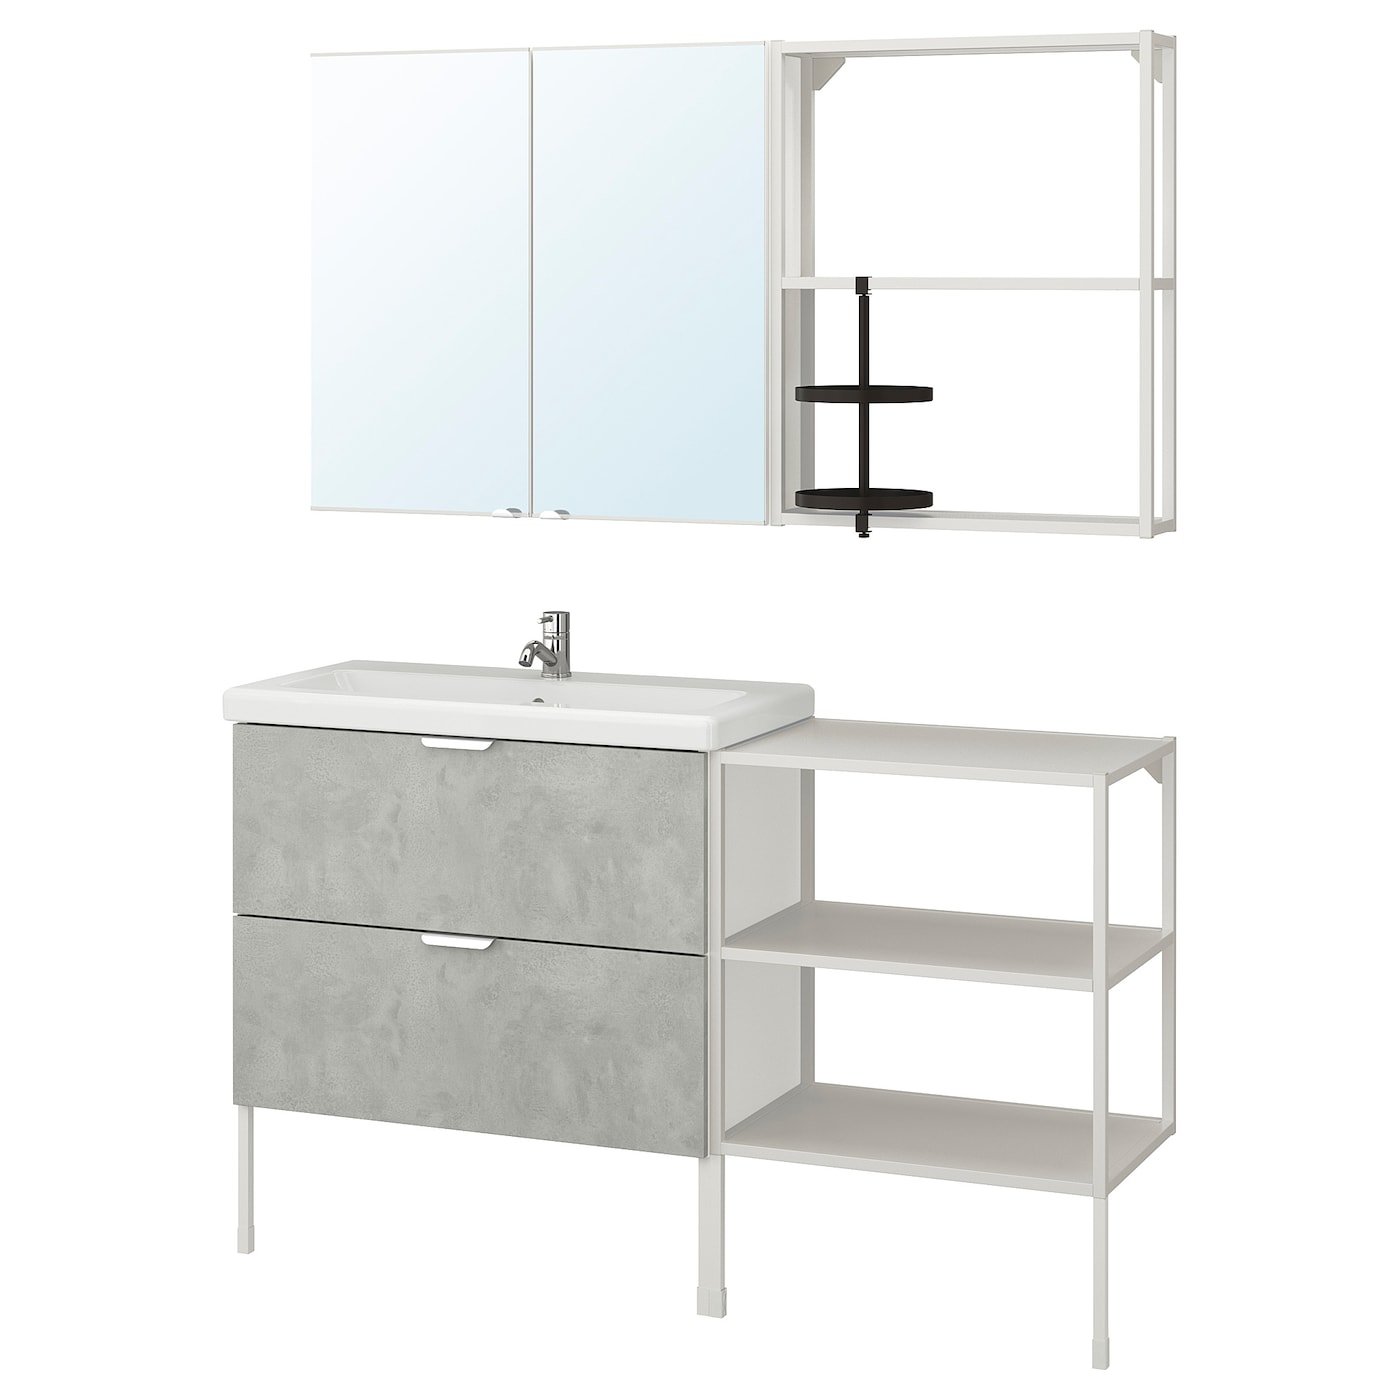 IKEA ENHET / TVÄLLEN Meble łazienkowe, zest. 15 szt, imitacja betonu/biały bateria Pilkån, 142x43x87 cm